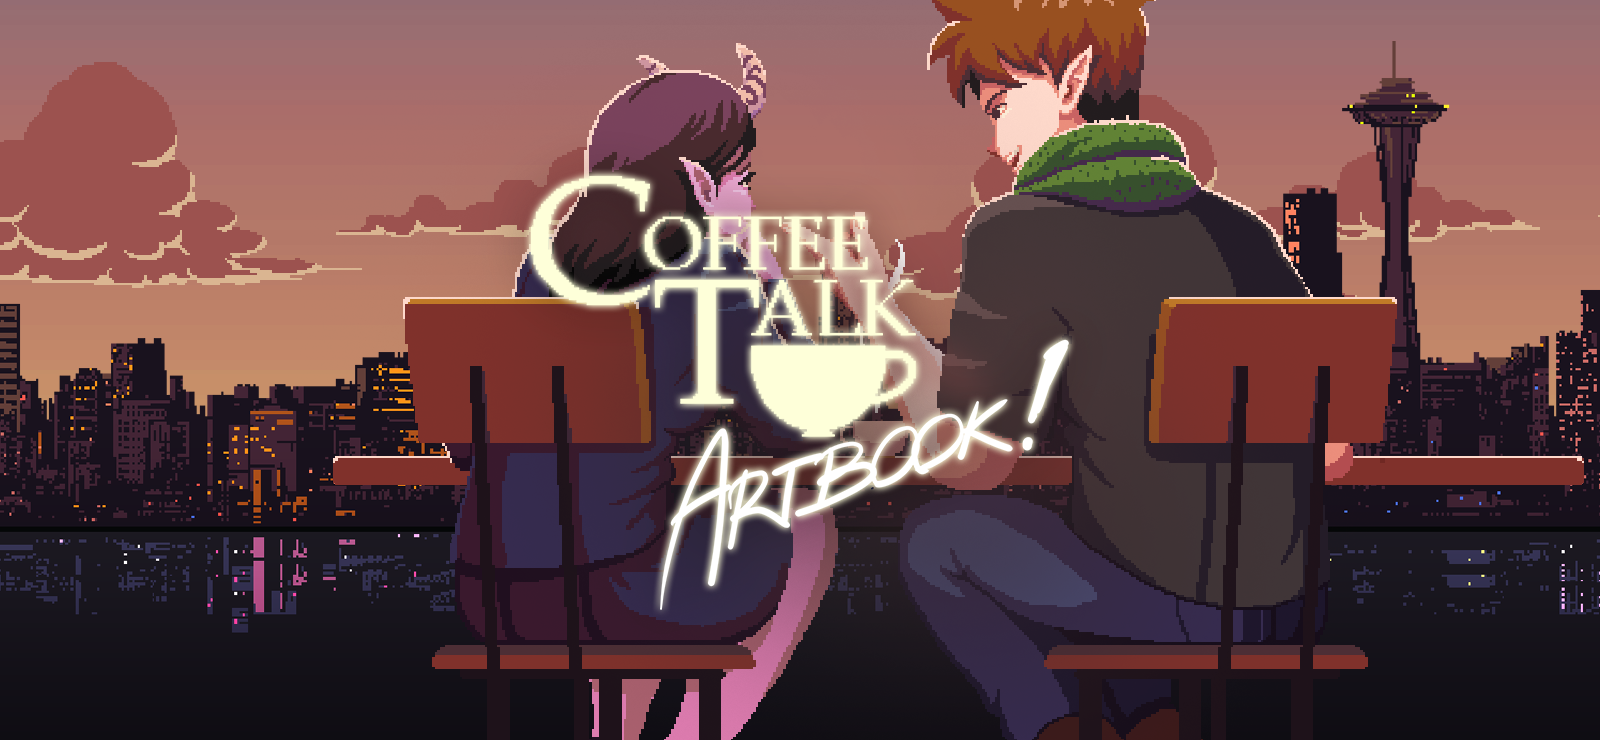 Coffee Talk - Artbook